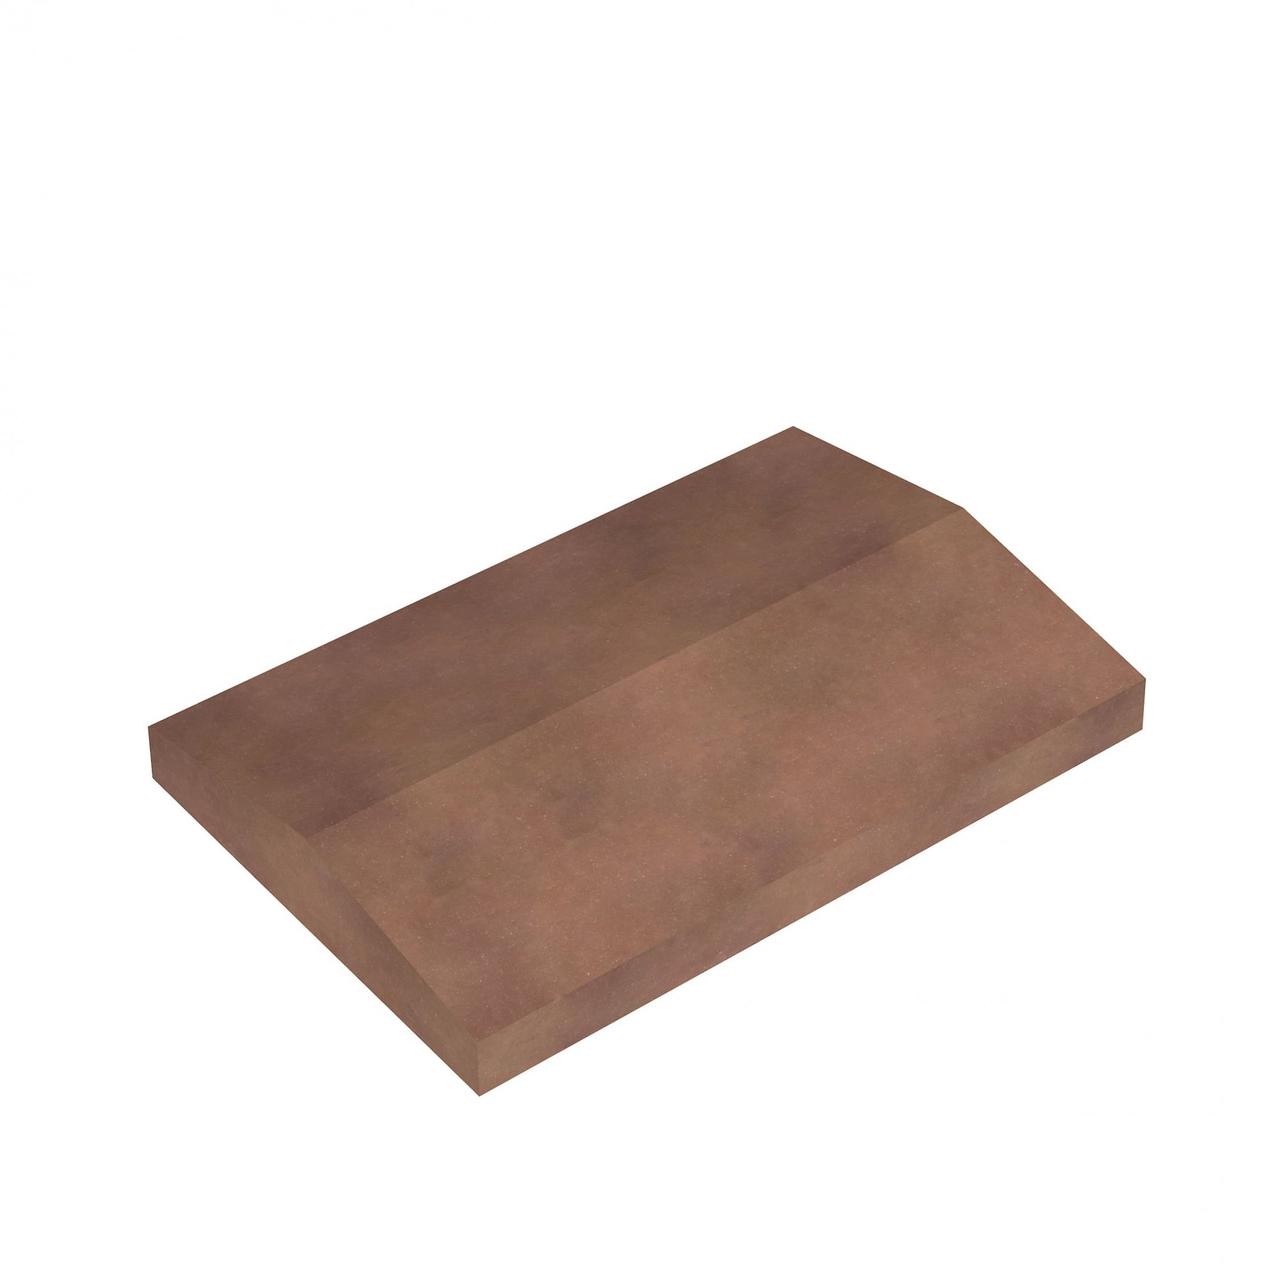 Крышка для пролета бетонная гладкая 490*300*70 мм (цвет шоколад)